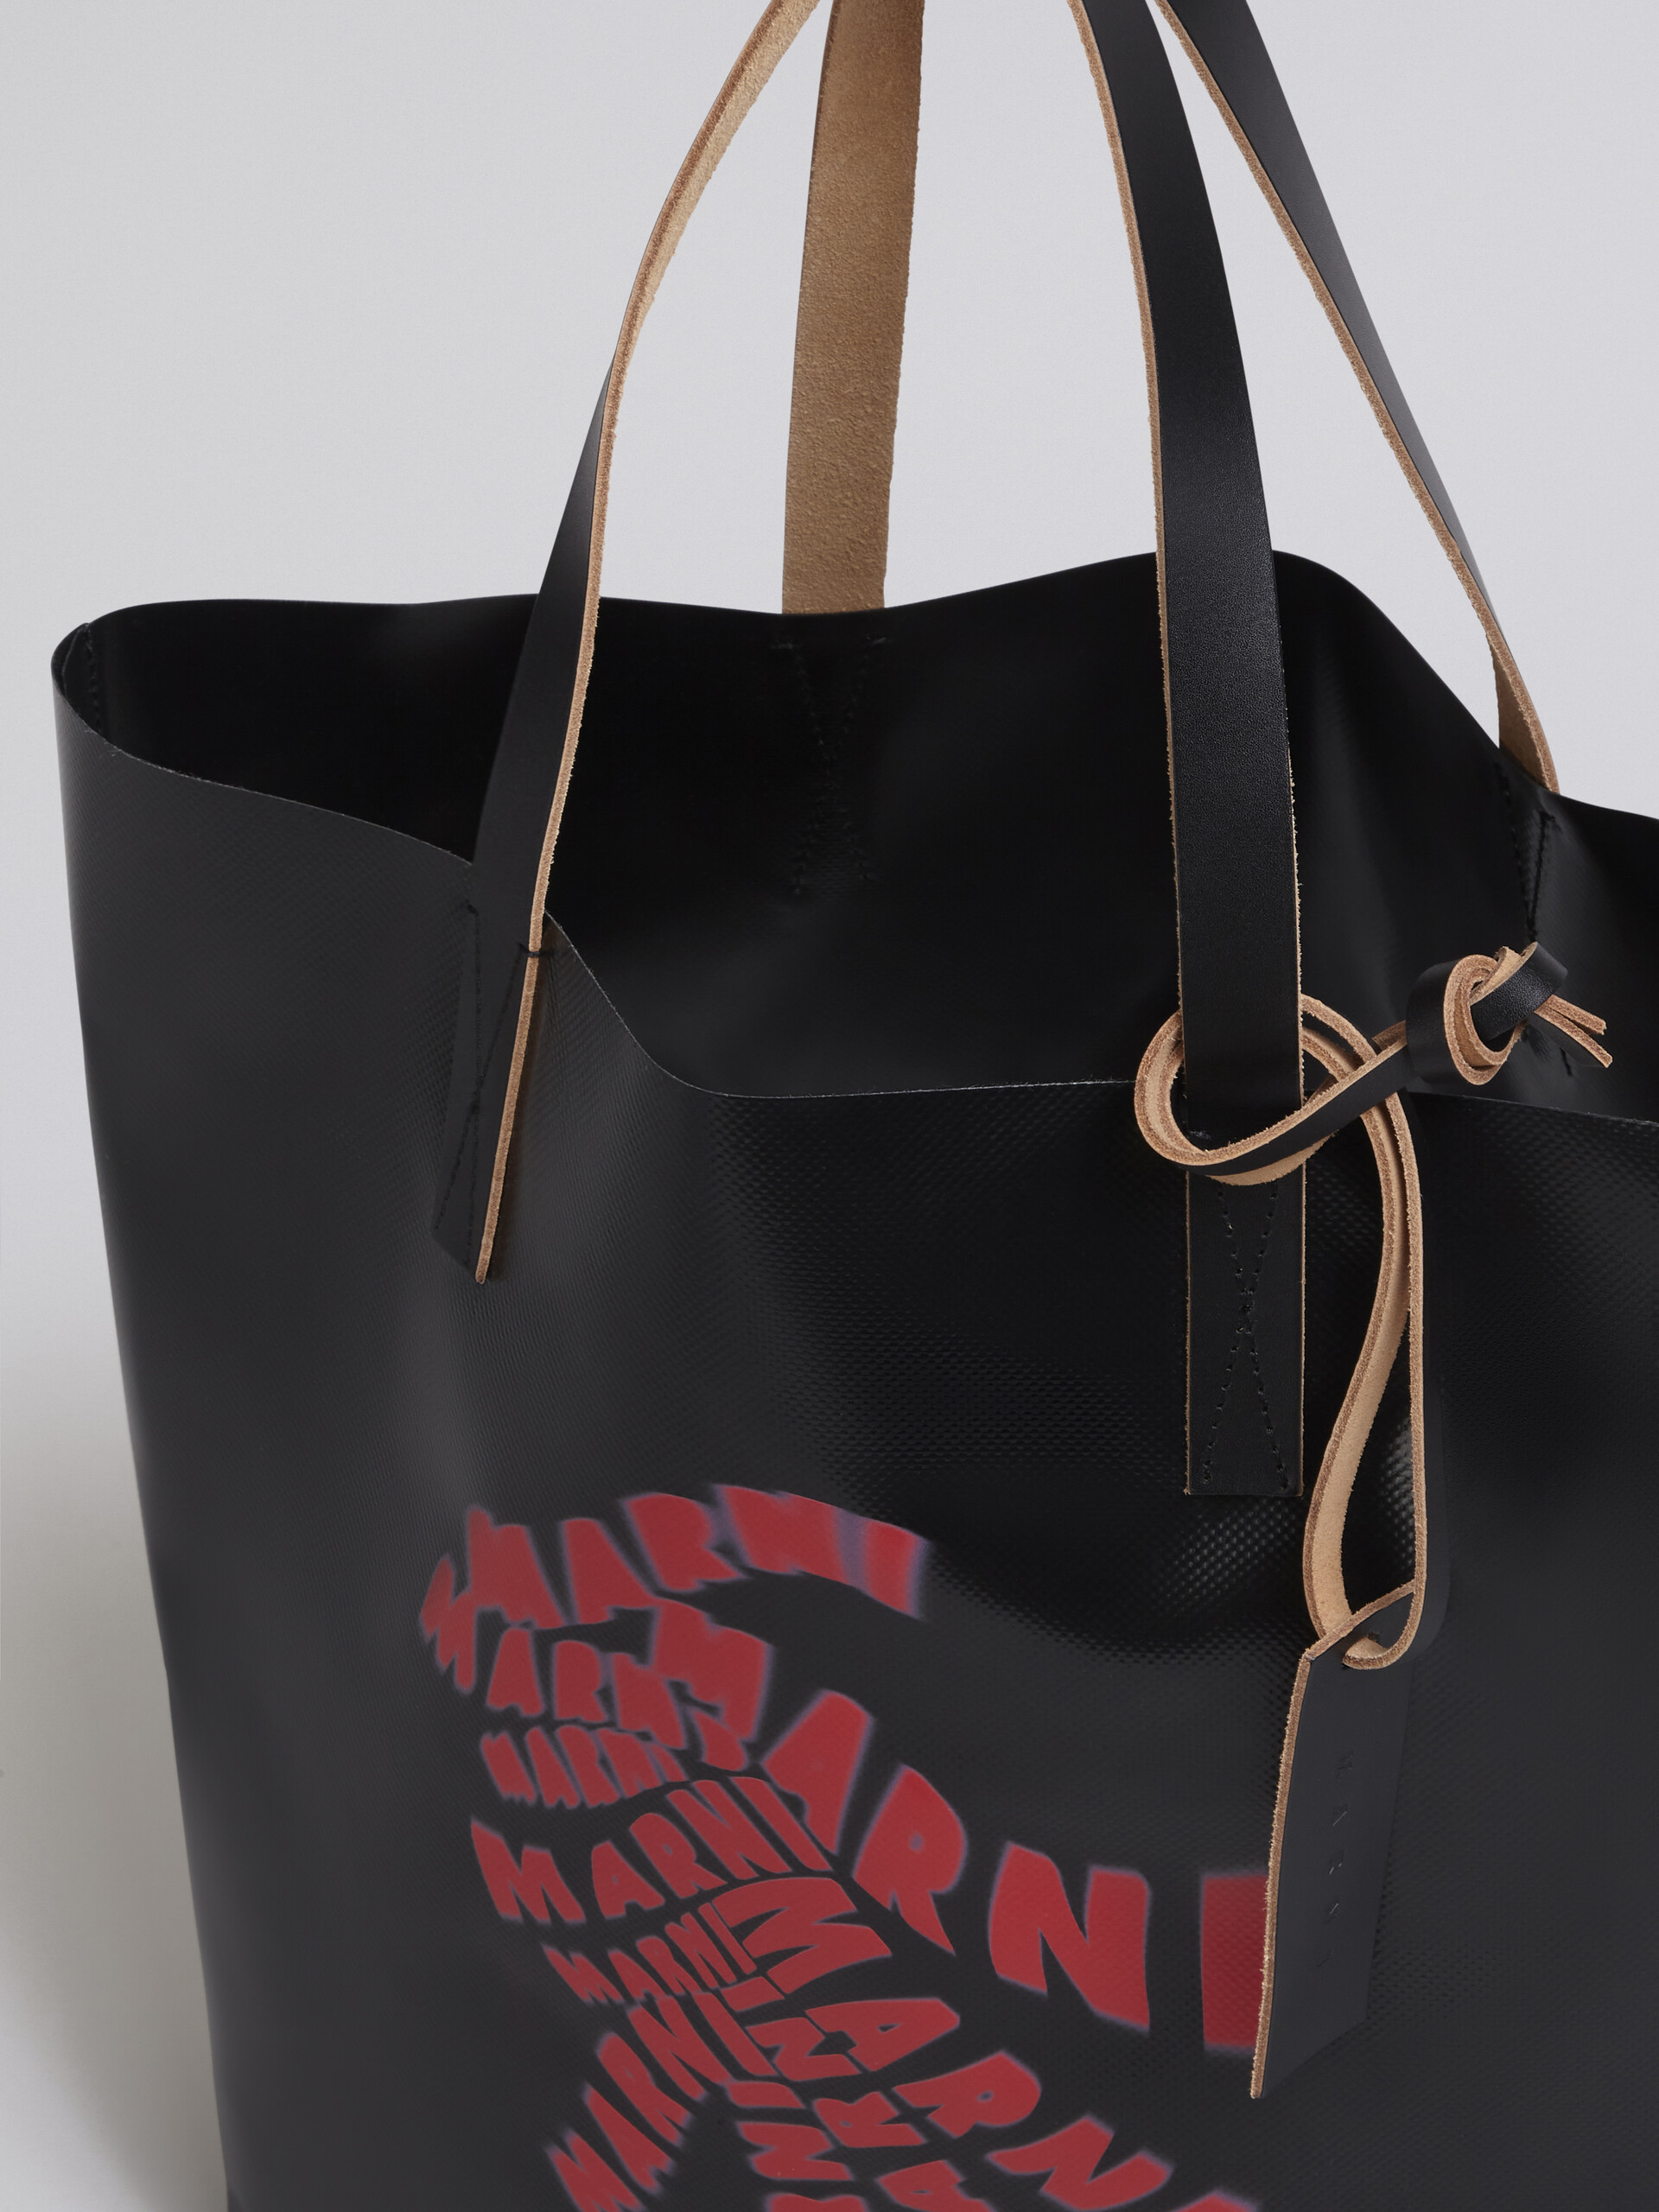 North-south TRIBECA PVC Spin printed shopping bag - Shopping Bags - Image 4